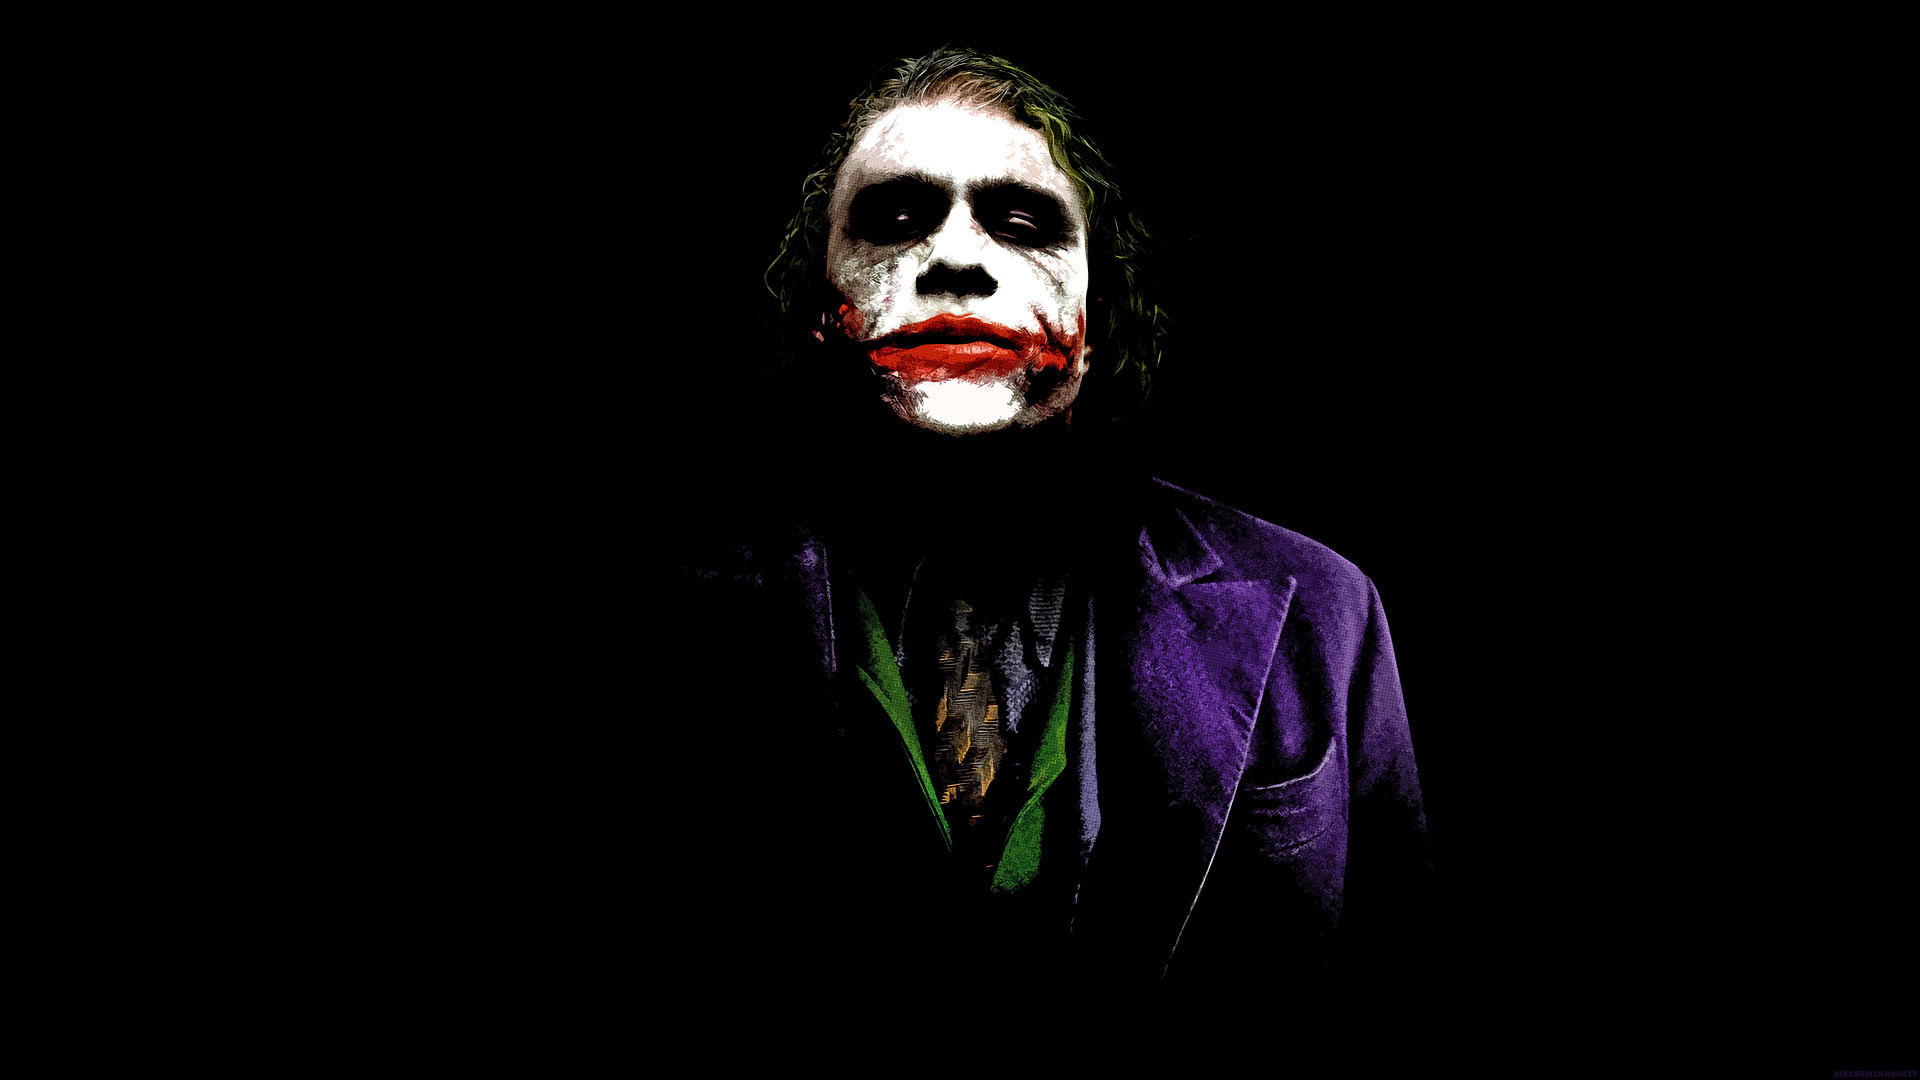 Joker The Joker Wallpaper 28092878 Fanpop 1920x1080